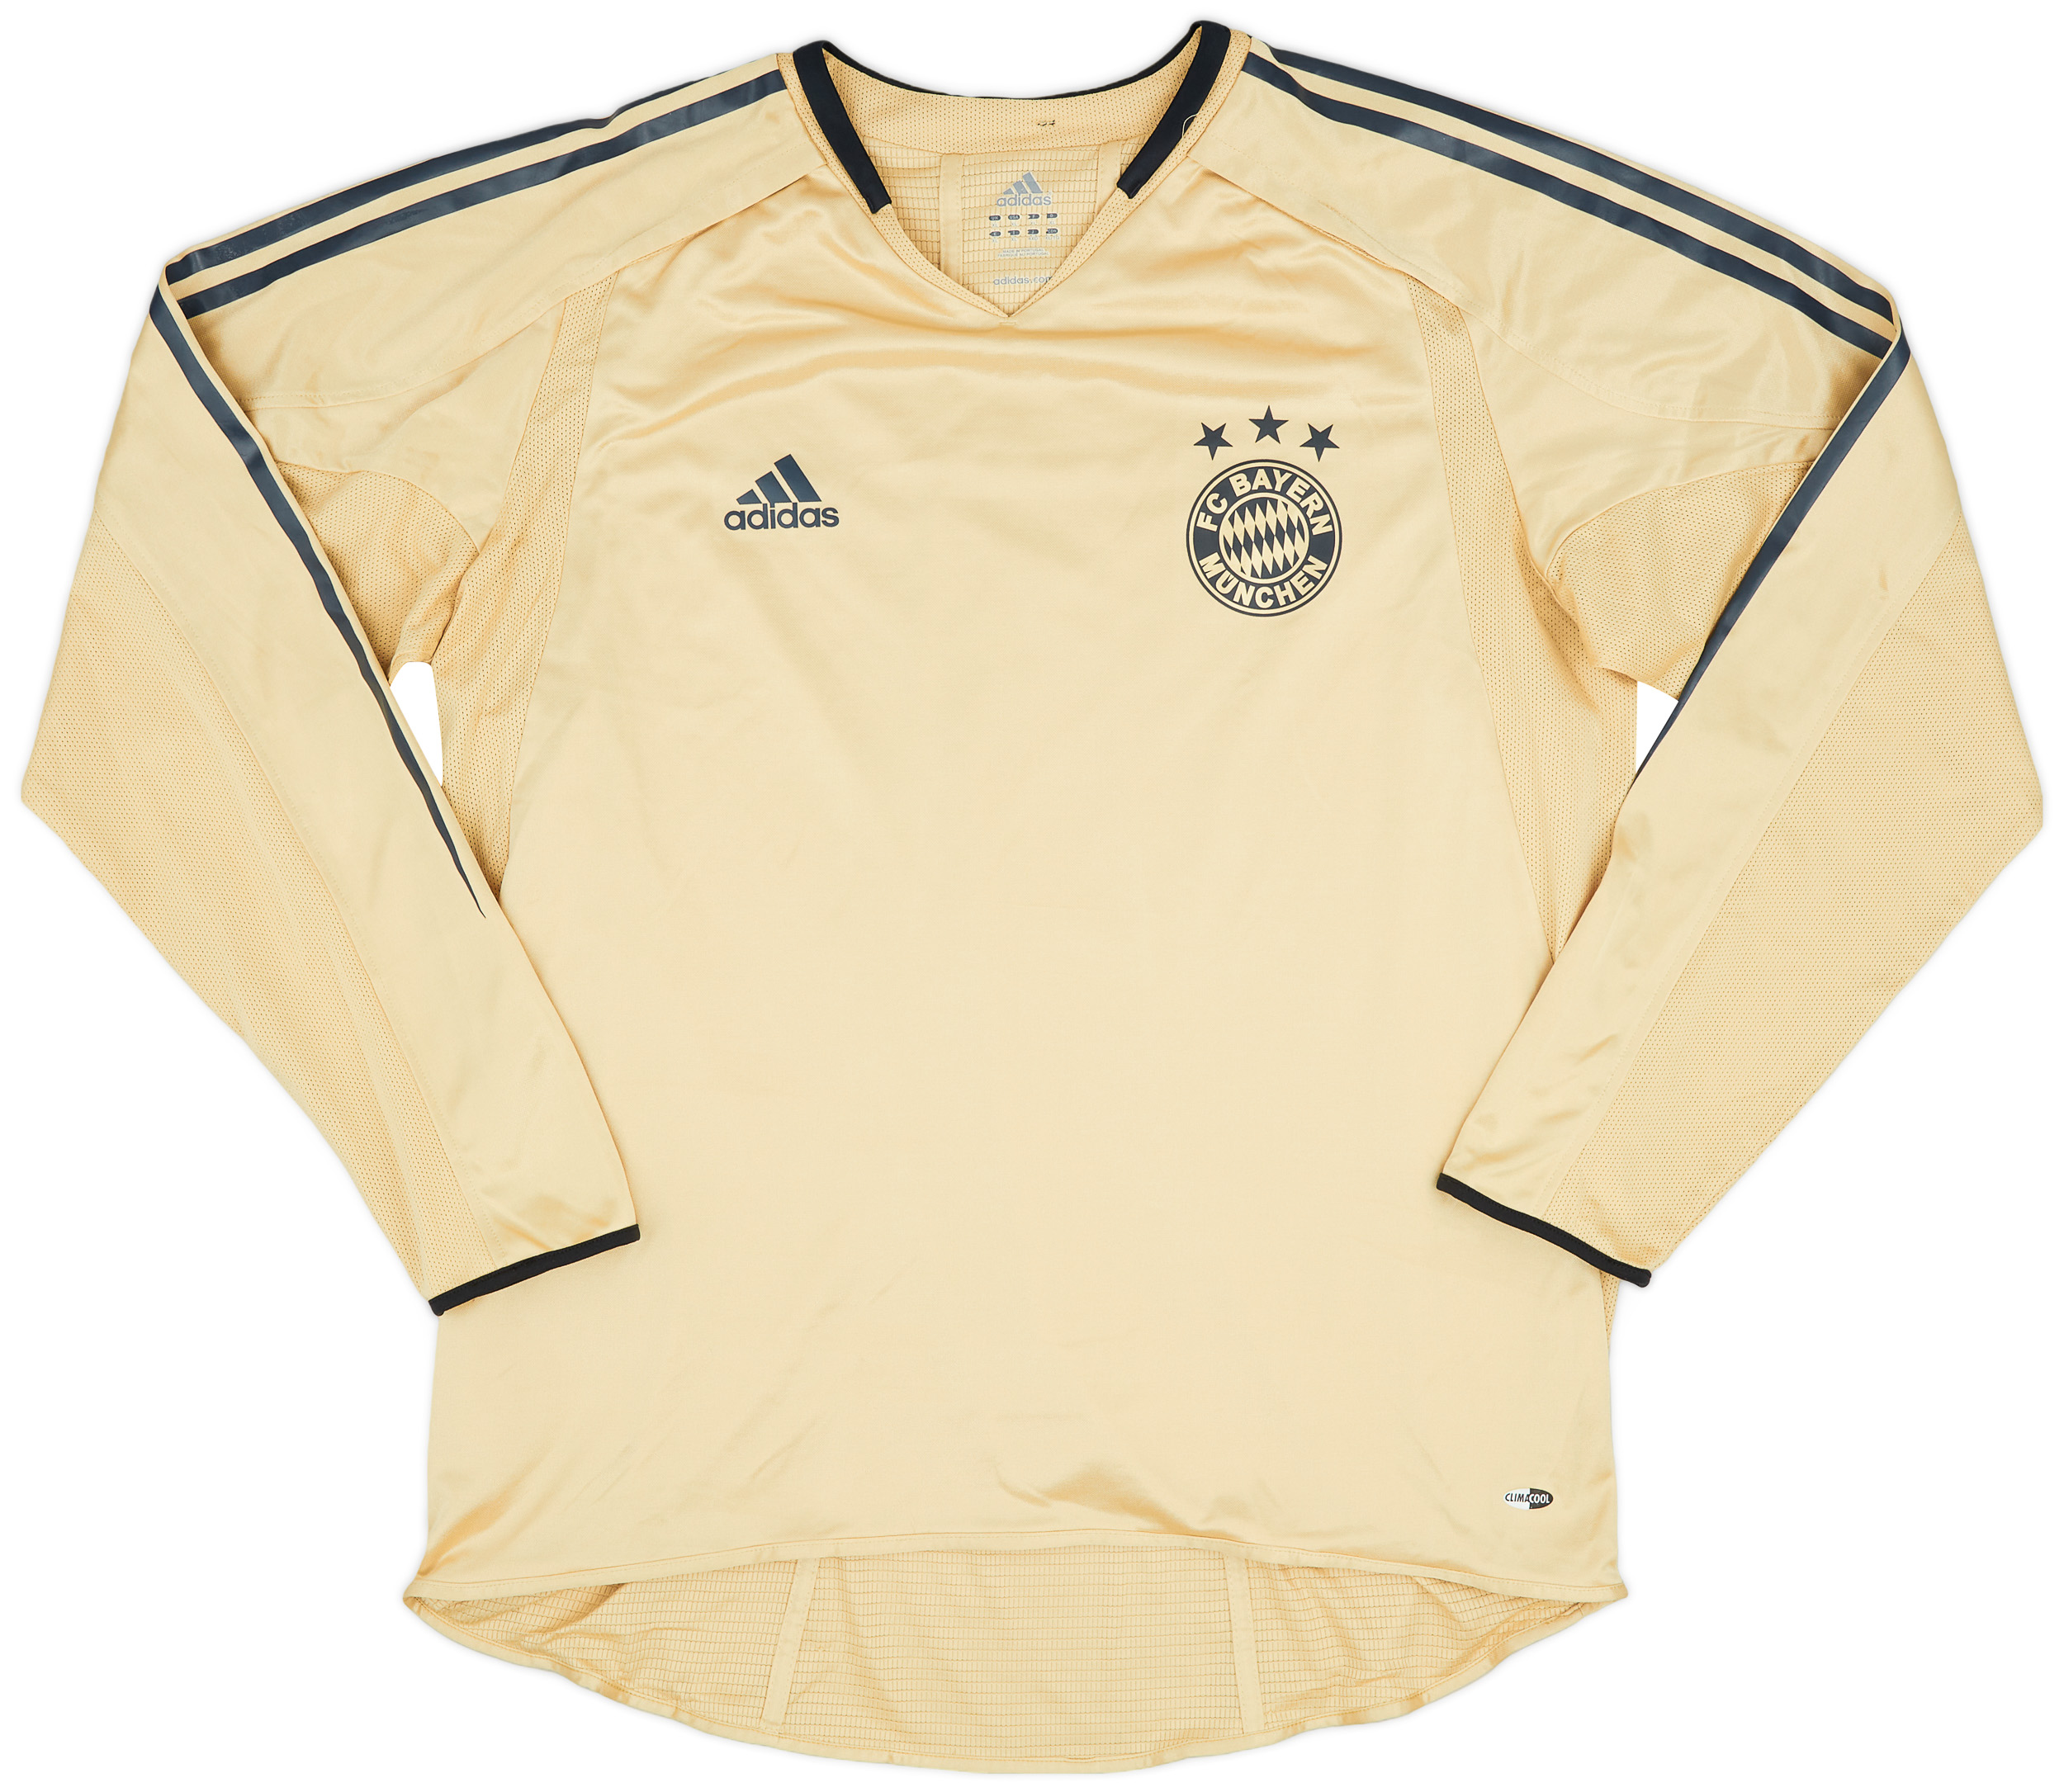 2004-05 Bayern Munich Player Issue Away Shirt - 9/10 - ()